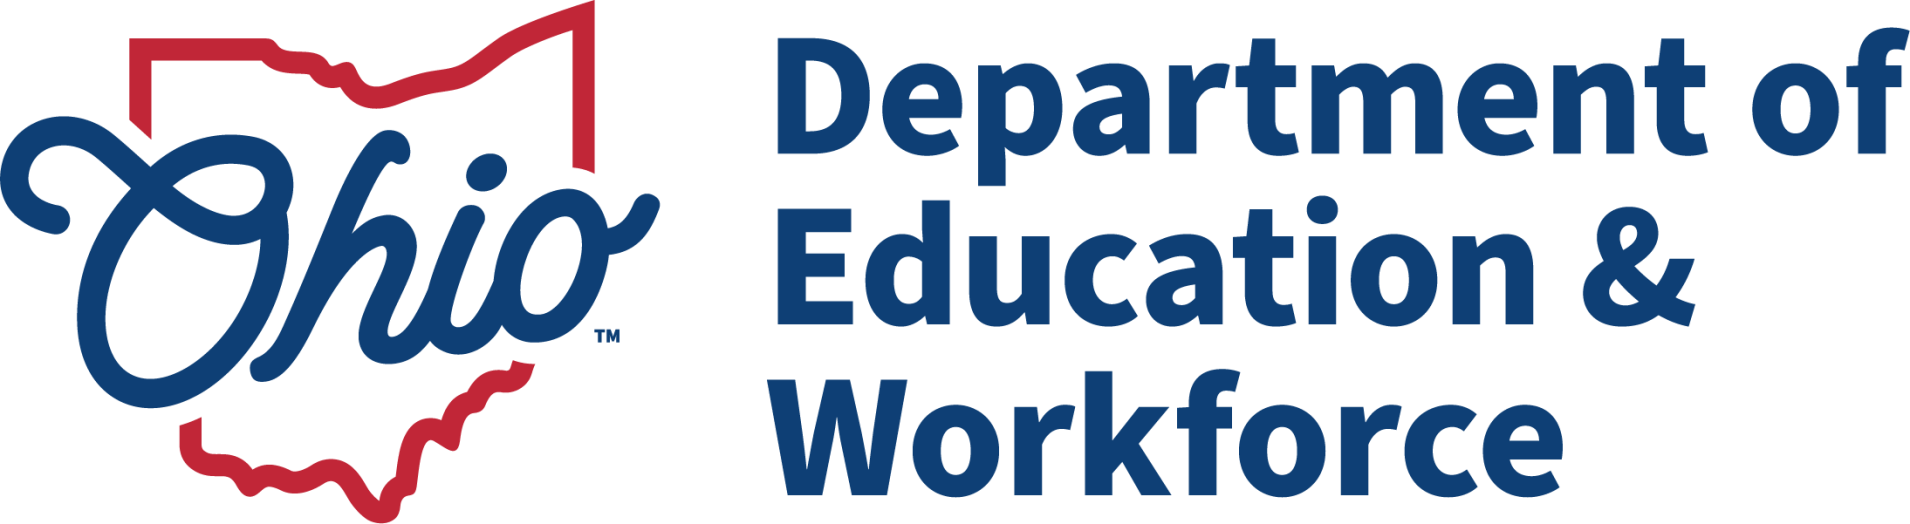 Ohio Department of Education Workforce